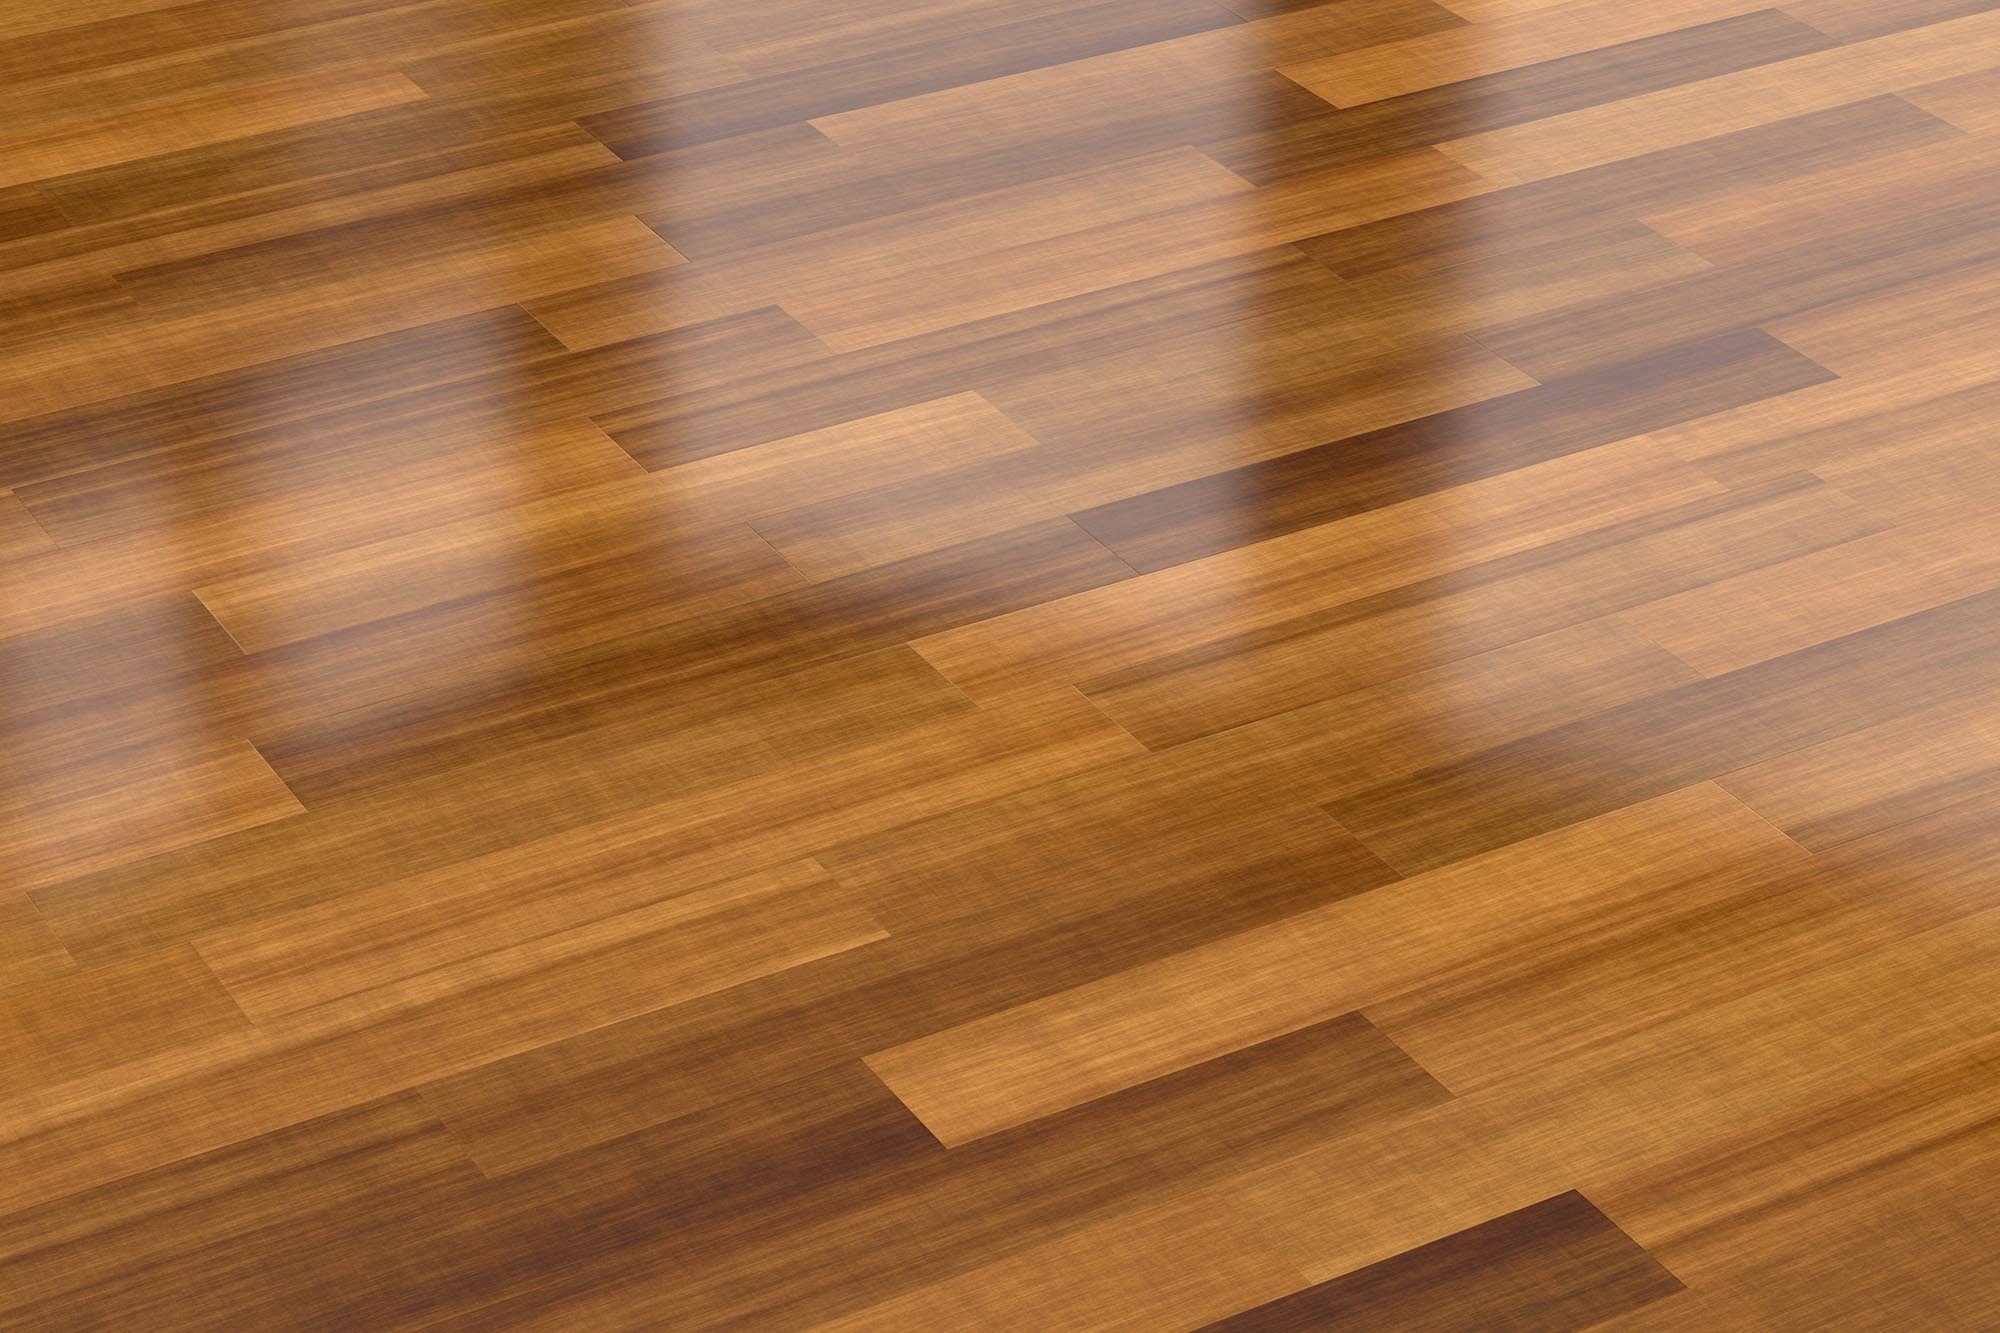 Close-up view of dark wood parquet floor